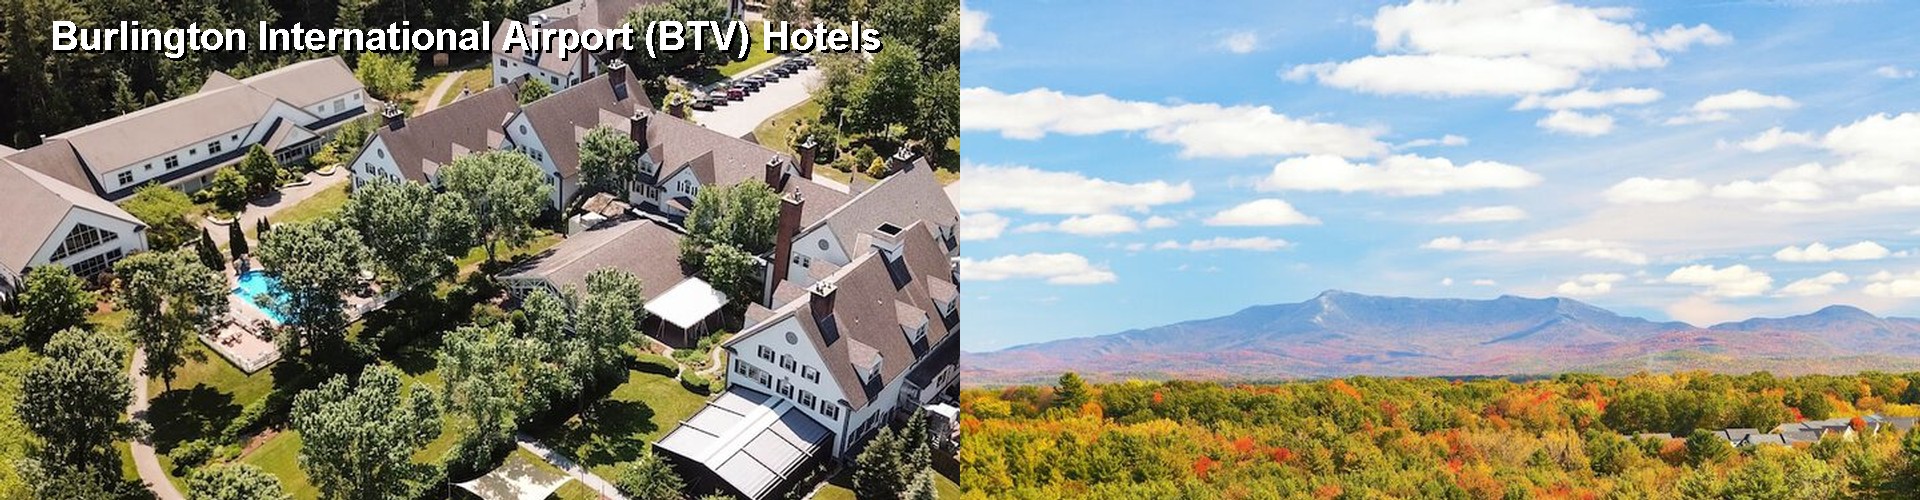 4 Best Hotels near Burlington International Airport (BTV)